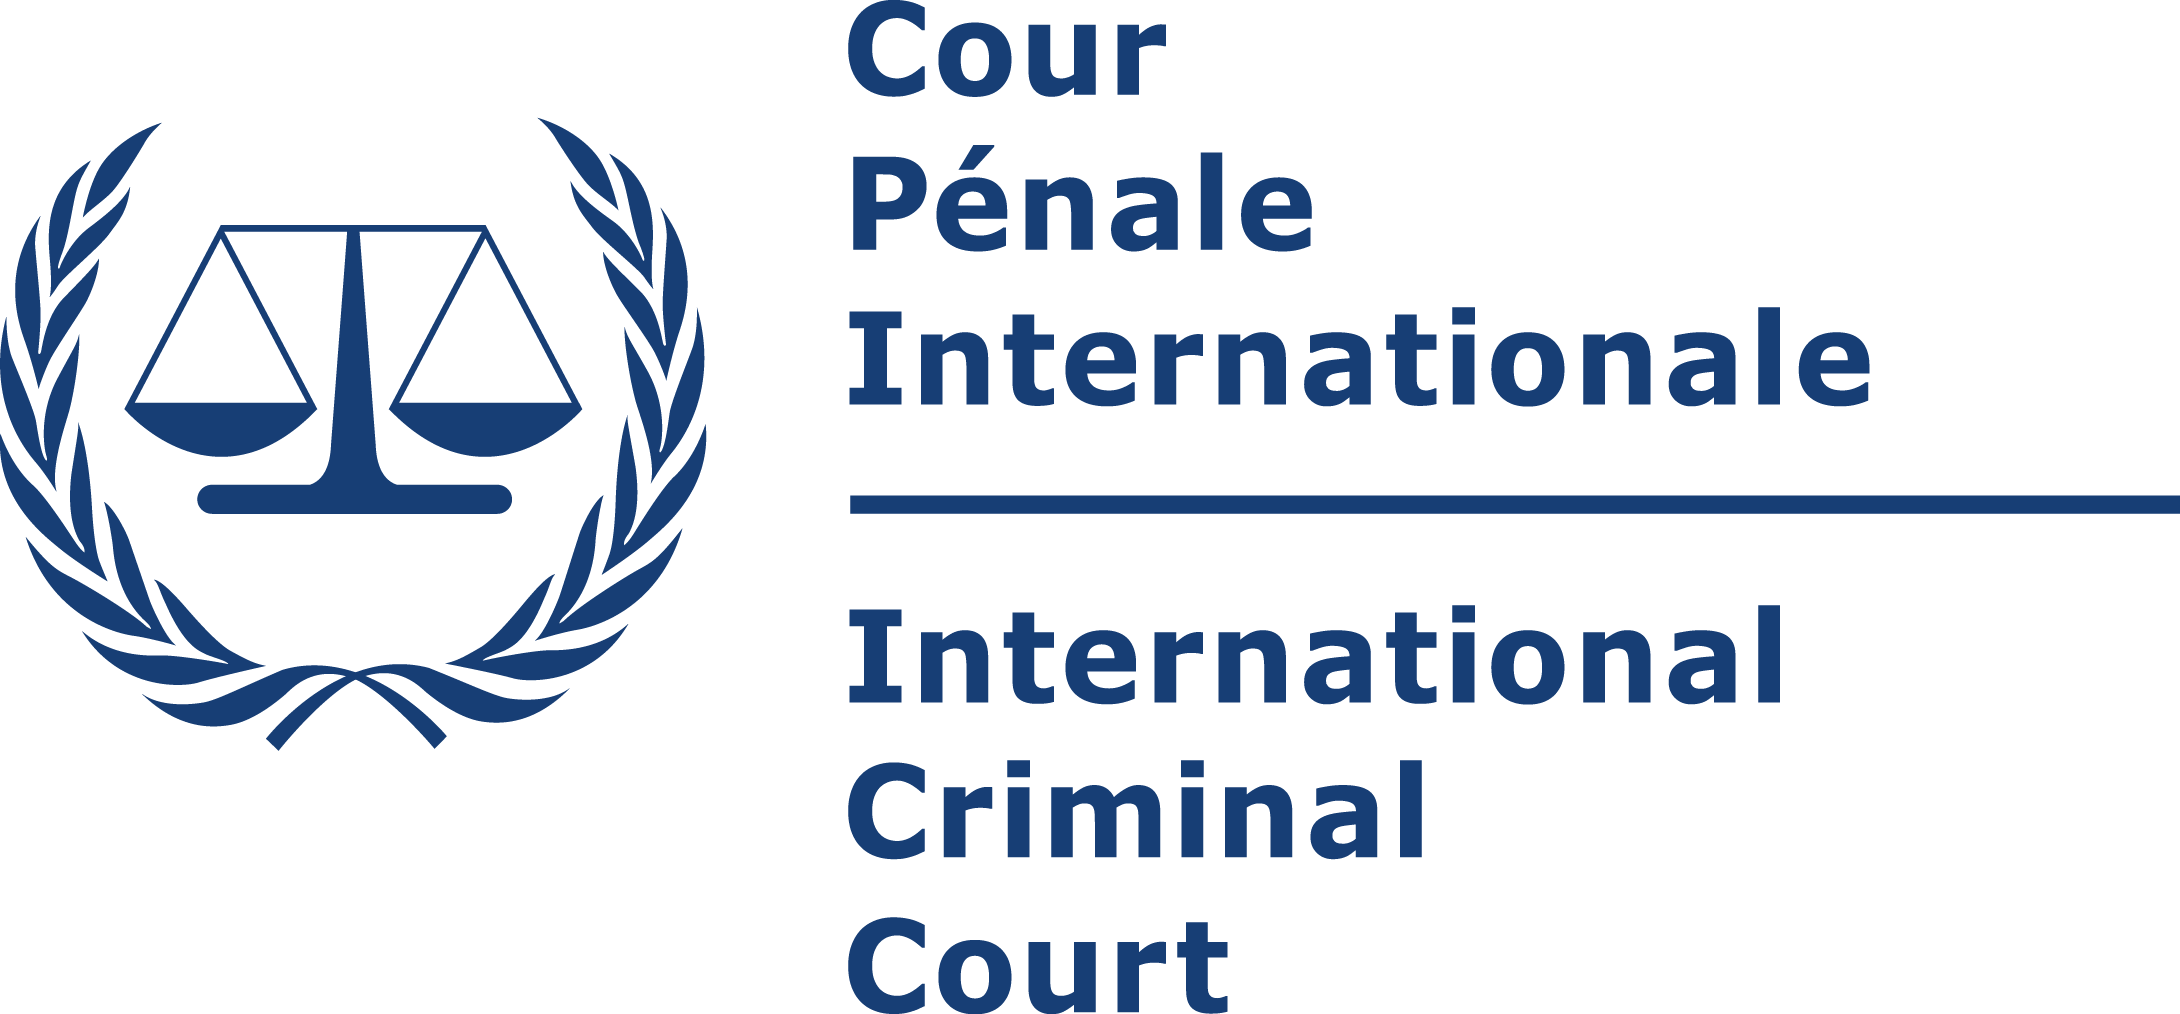 International Criminal Court logo